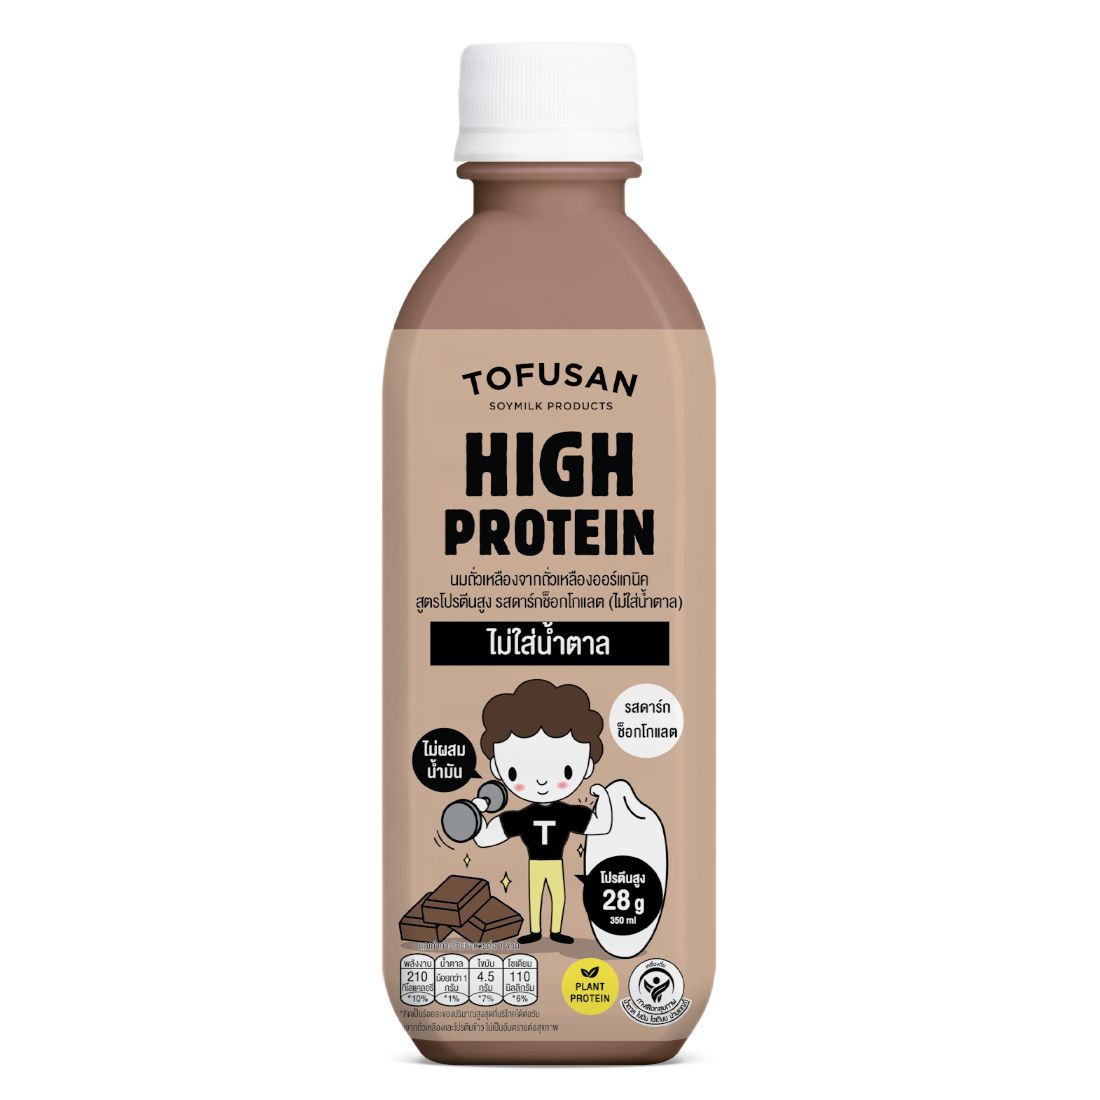 Tofusan soymilk high protein